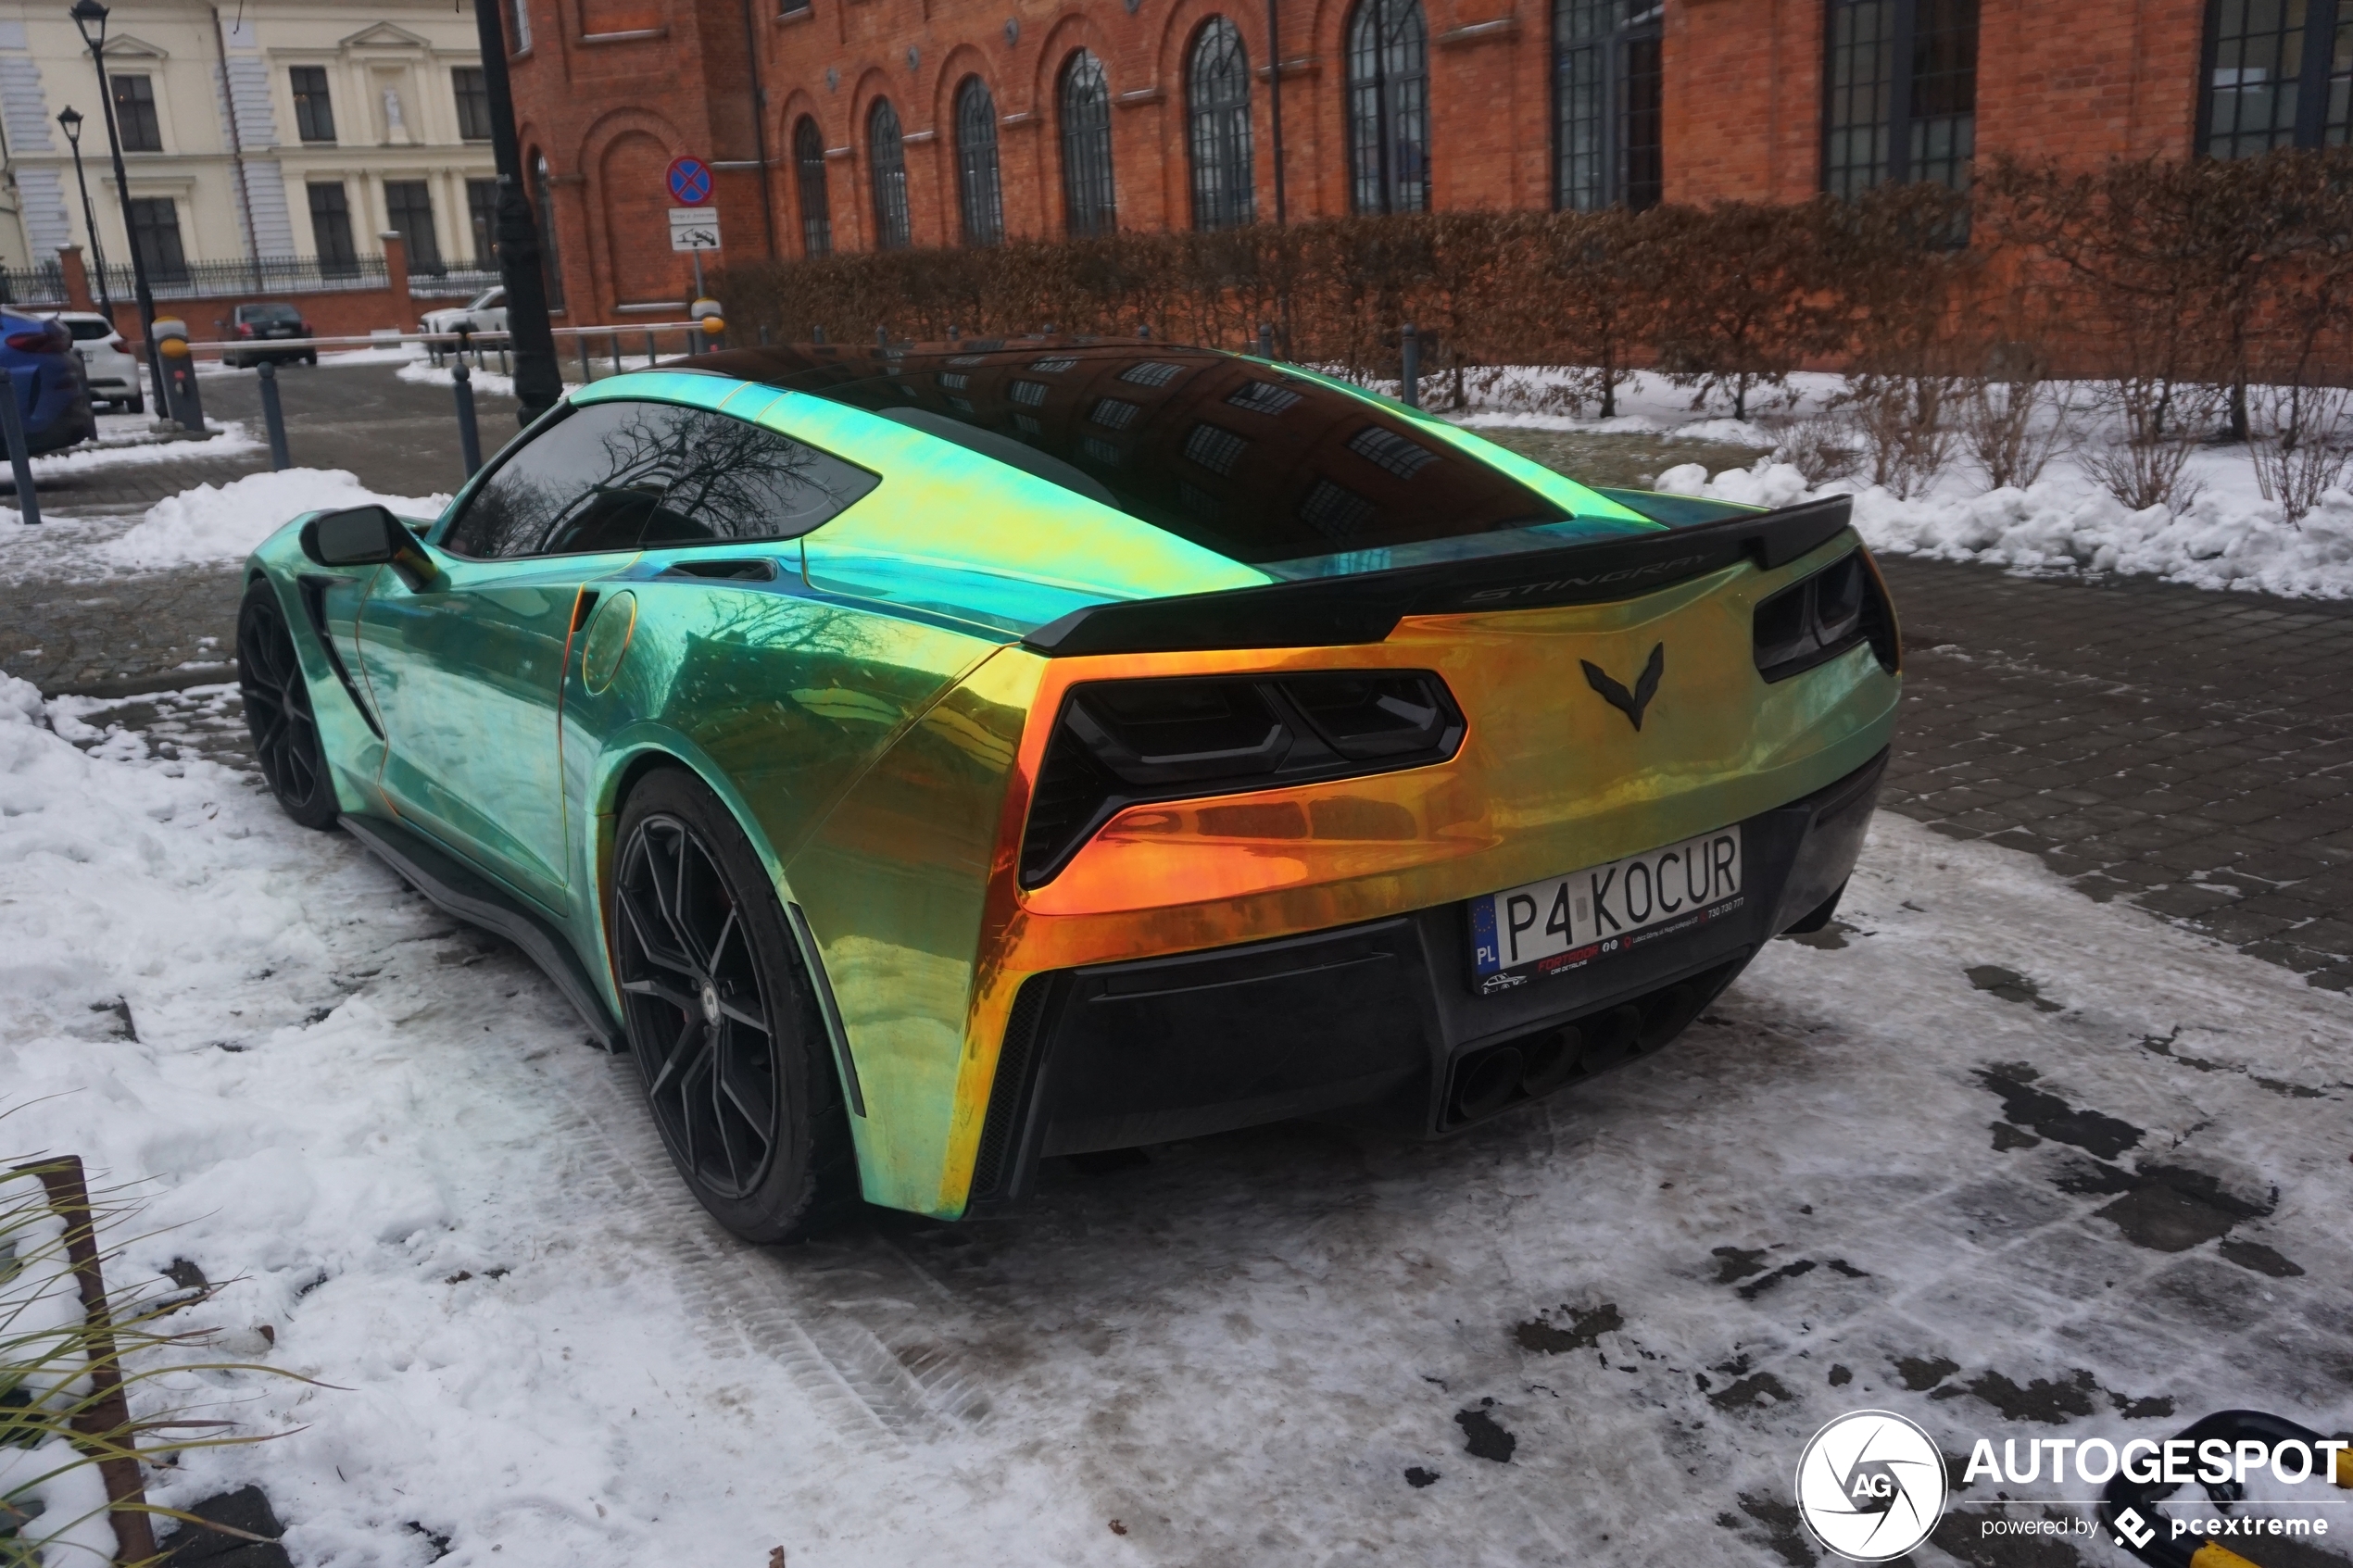 Verblindende Corvette in Polen